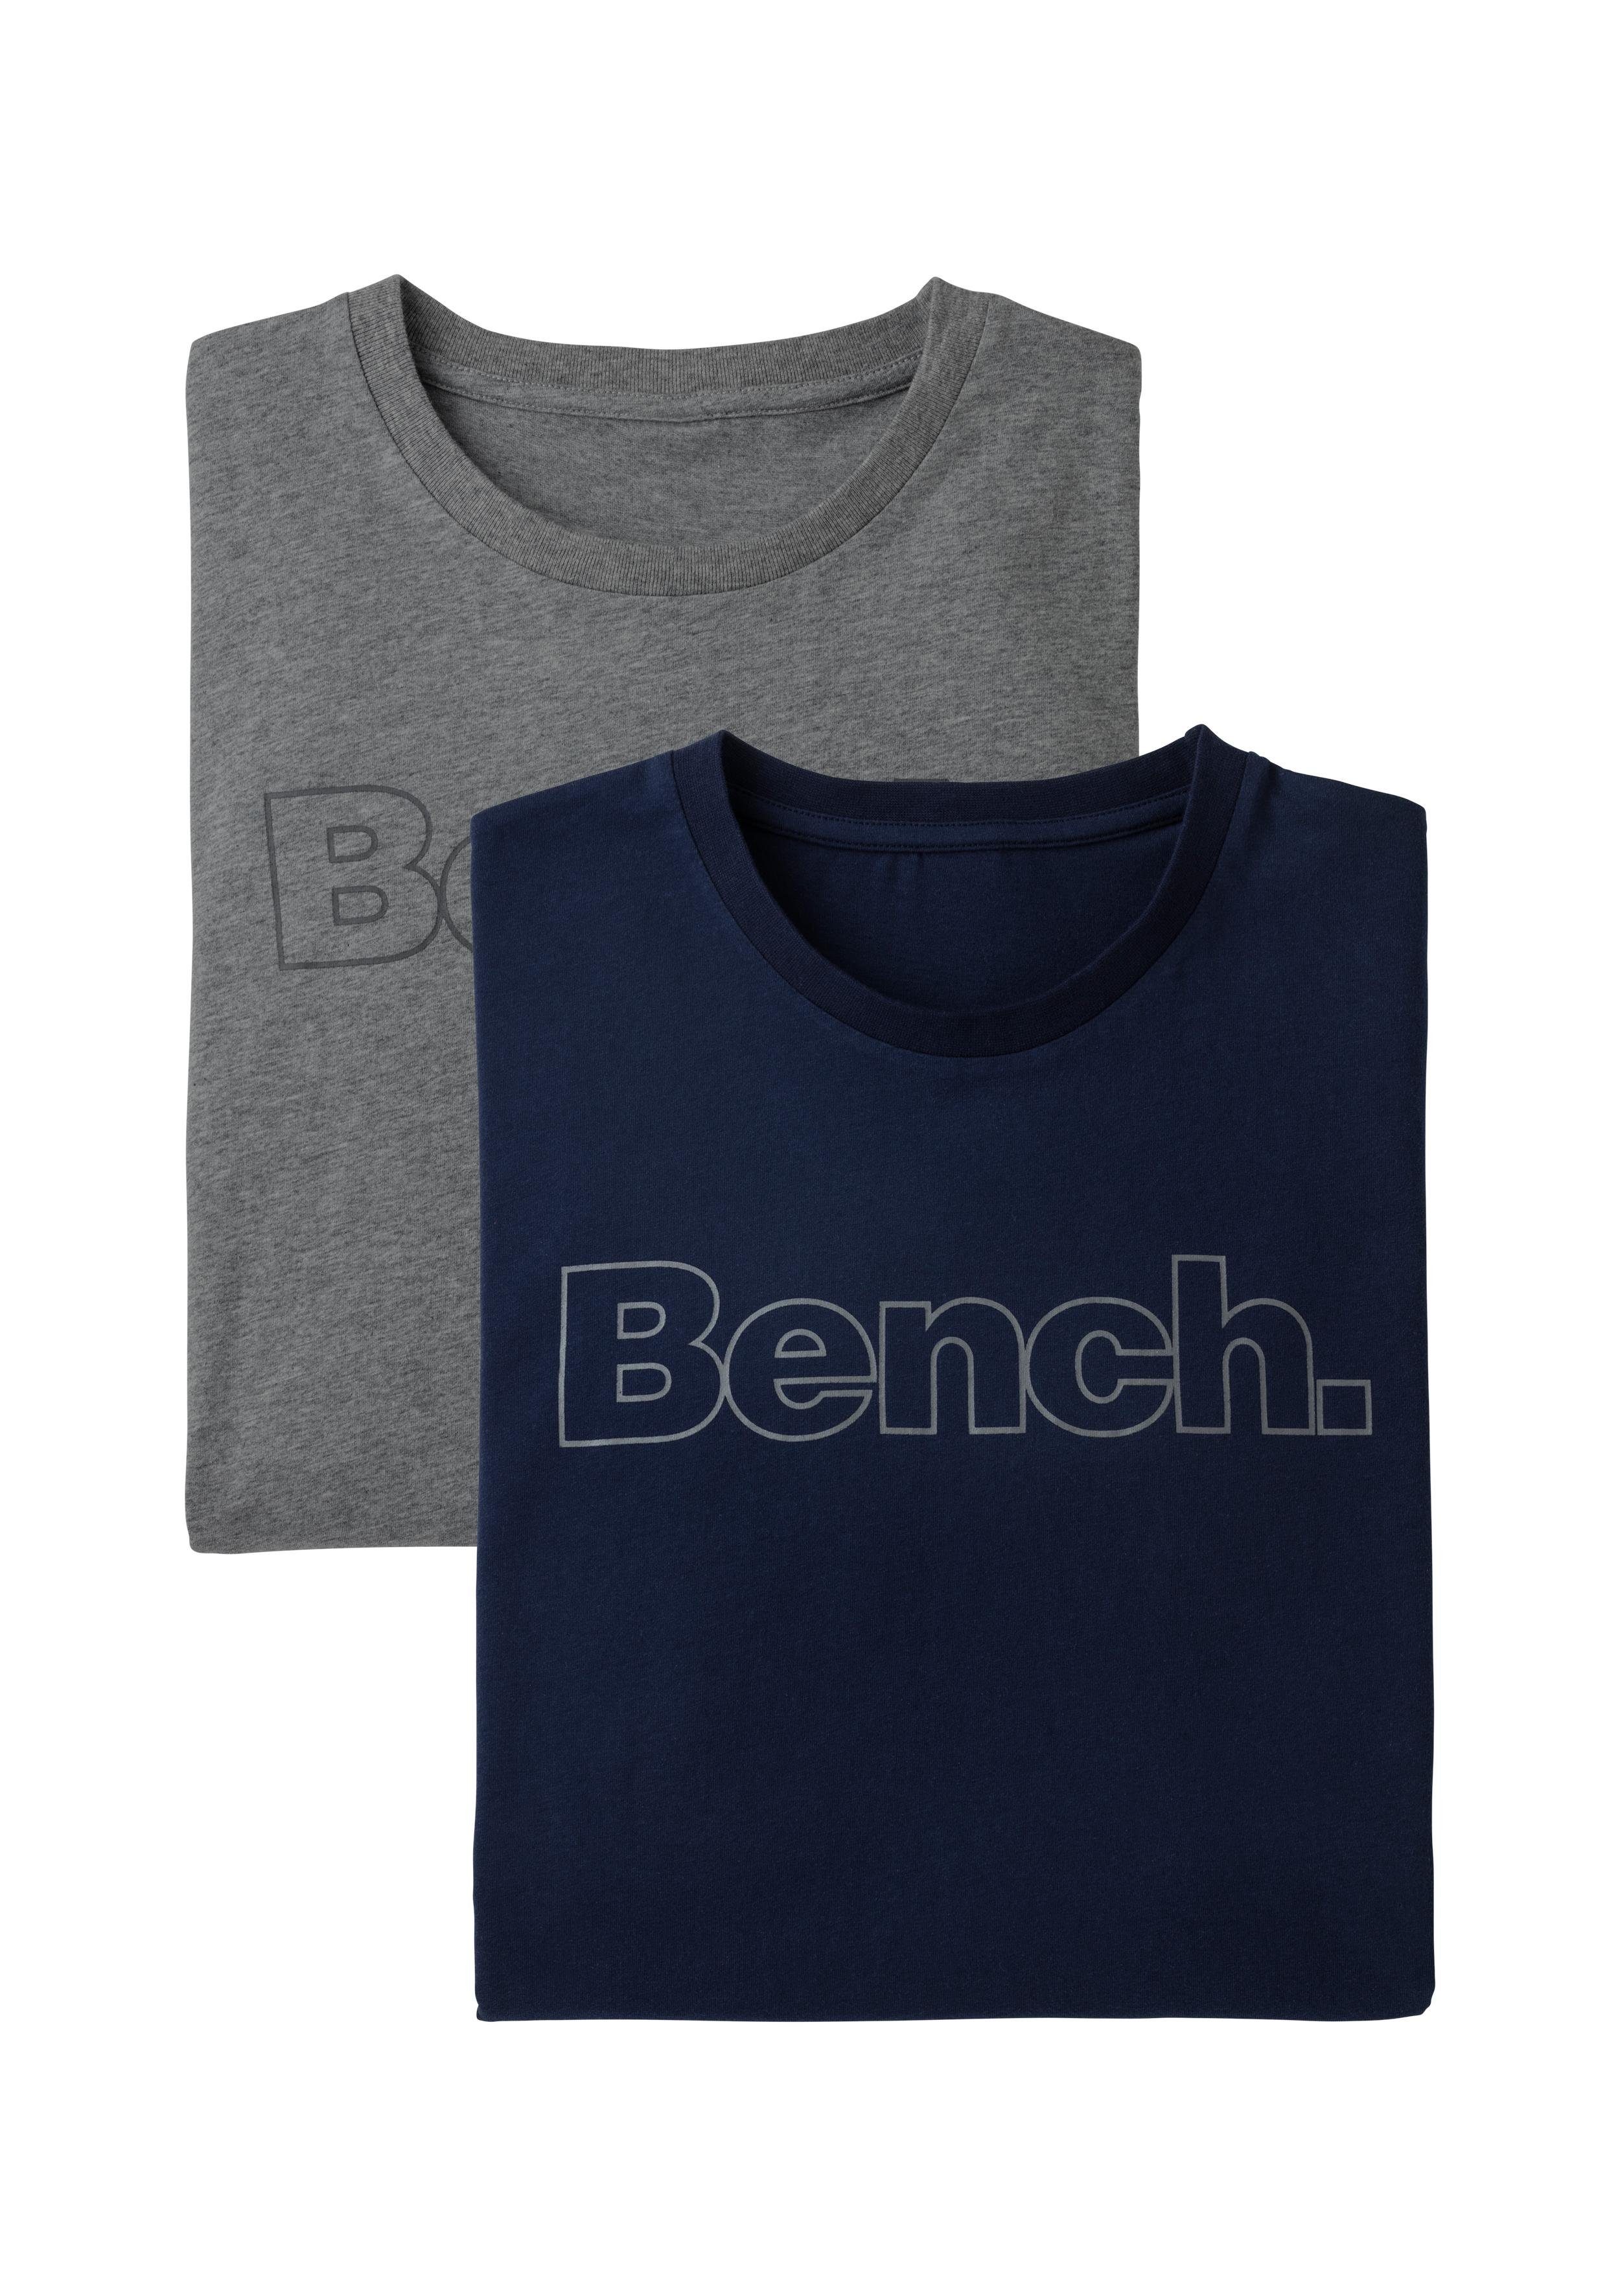 Bench. Loungewear grau-meliert (2-tlg) Bench. Langarmshirt vorn navy, mit Print